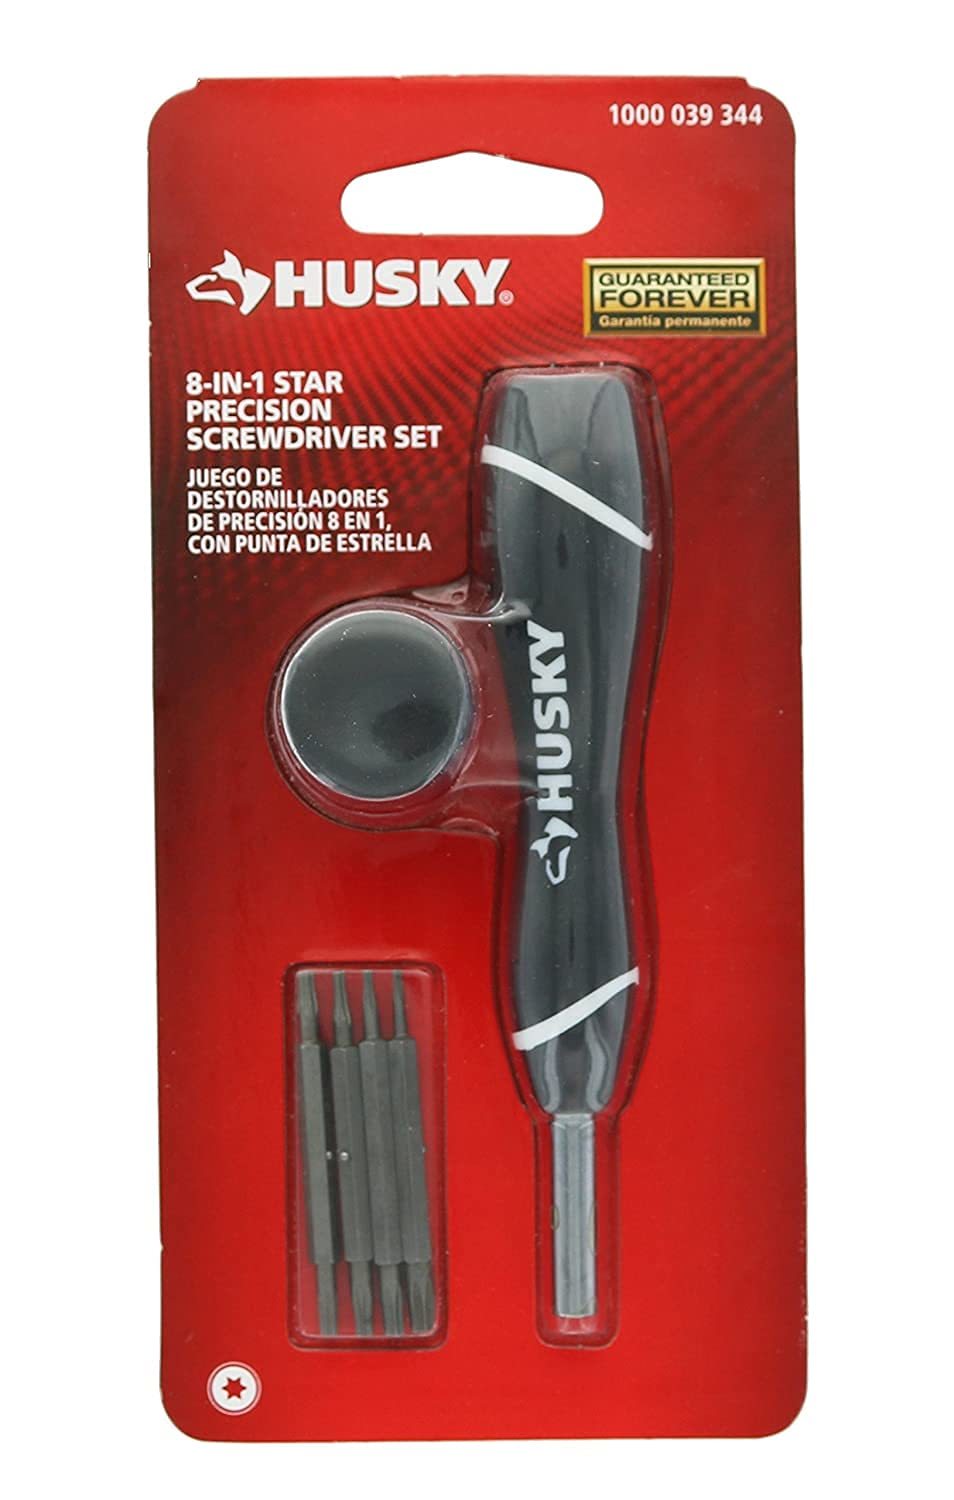 Husky 1000 039 344 8-in-1 Star Precision Screwdriver Set - $17.24